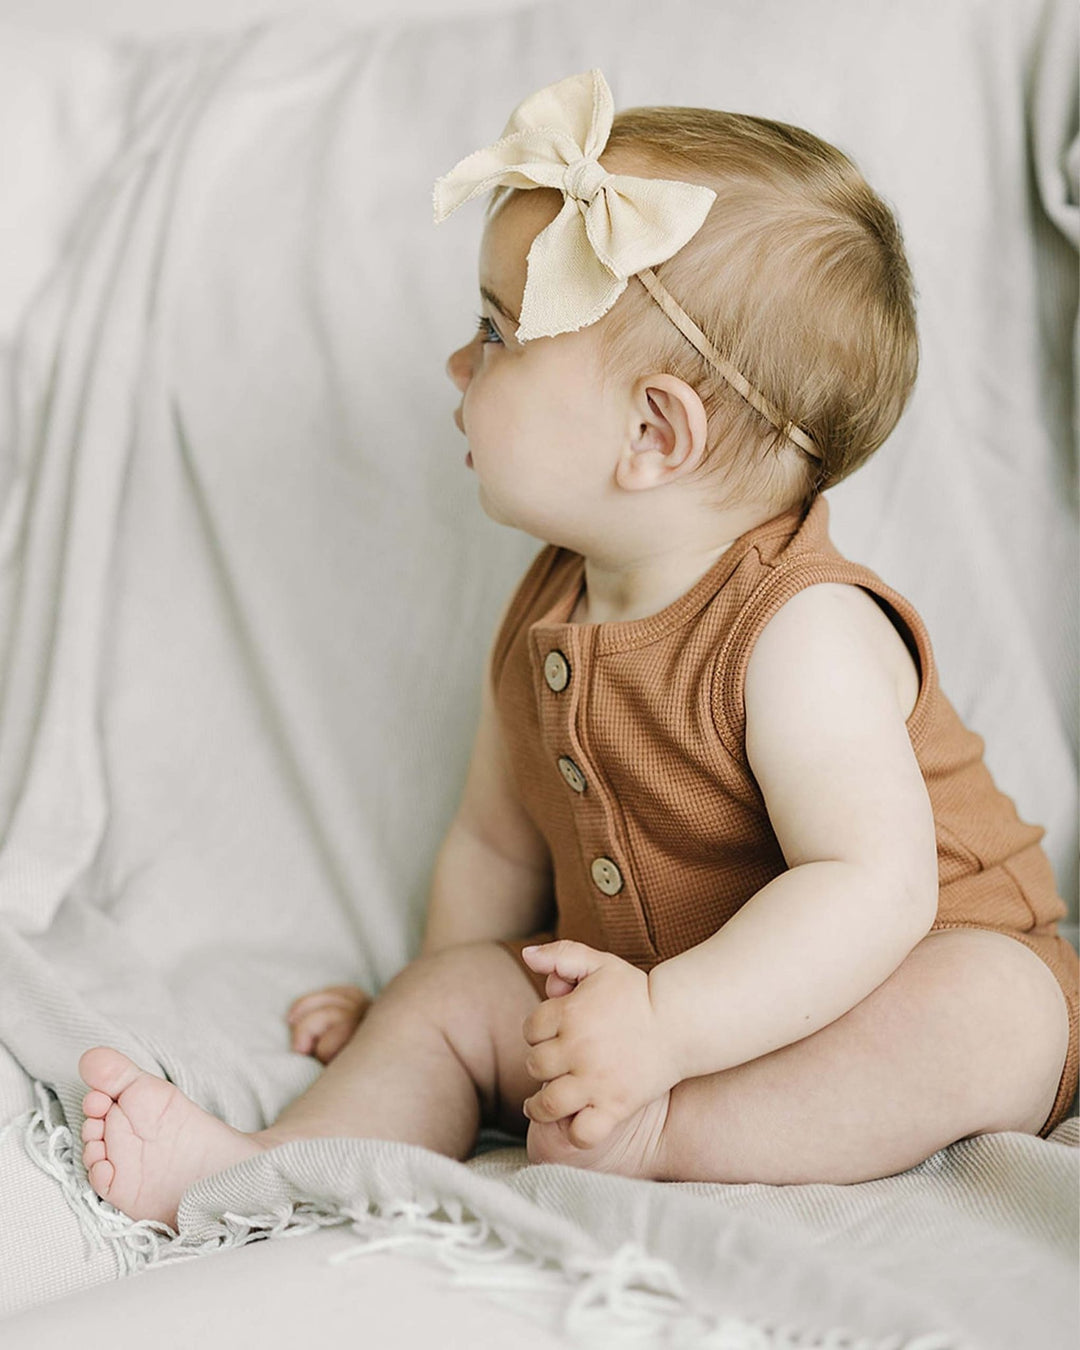 Oat Linen Bow - baby bows and headbands - LUCKY PANDA KIDS